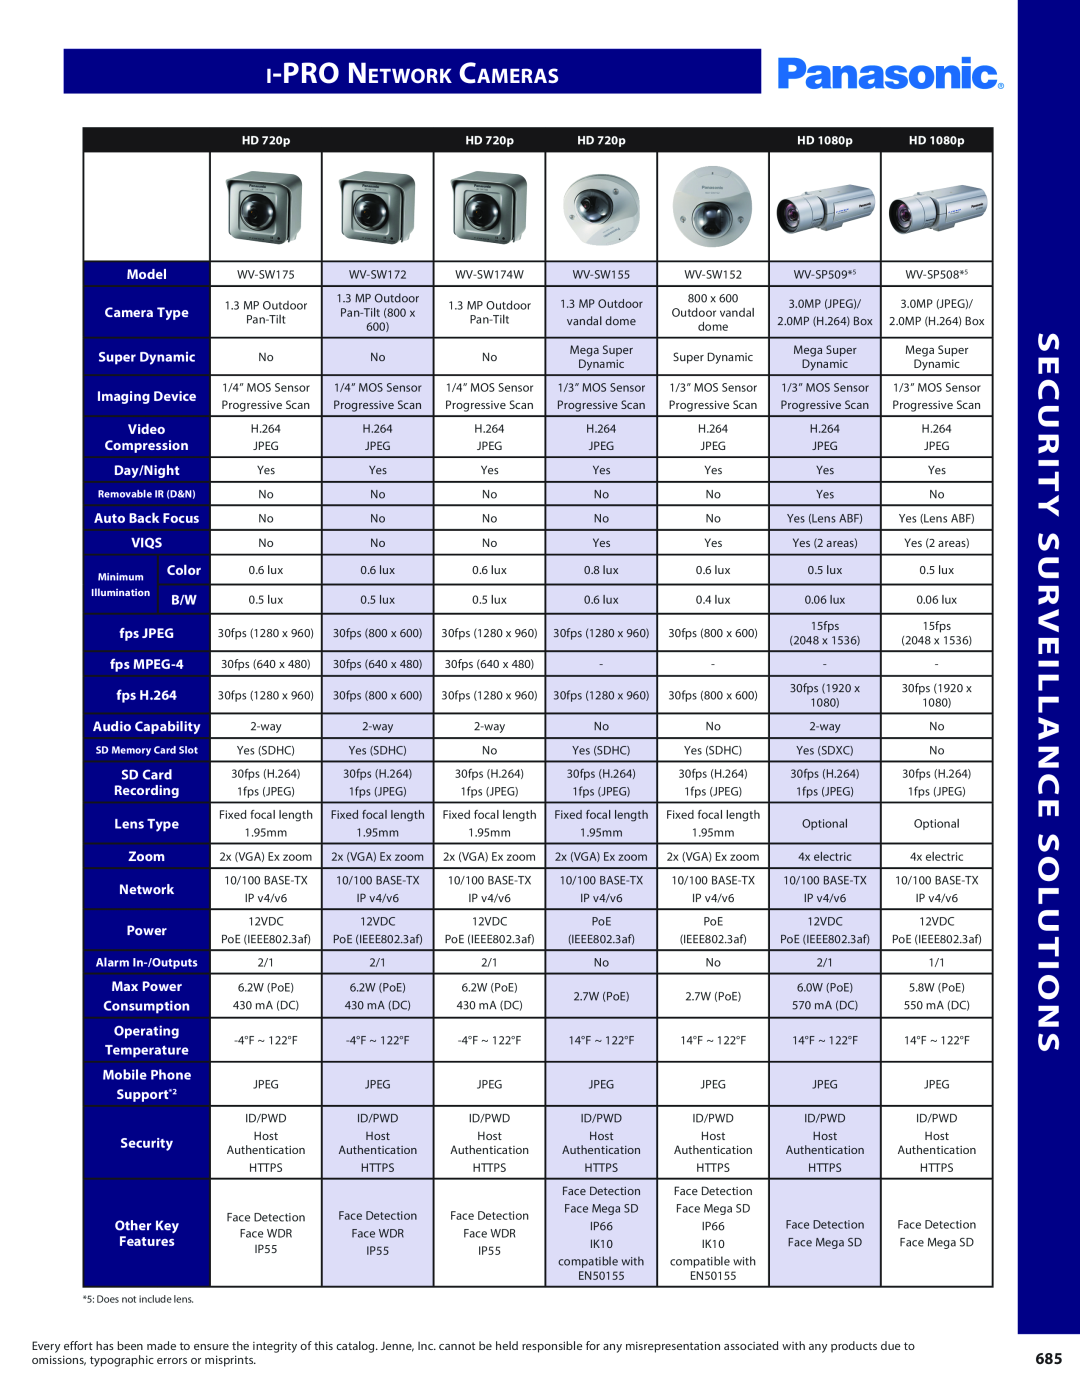 Panasonic PMPU2000 manual Security Surveillance Solutions, i-PRONetwork Cameras, Model 